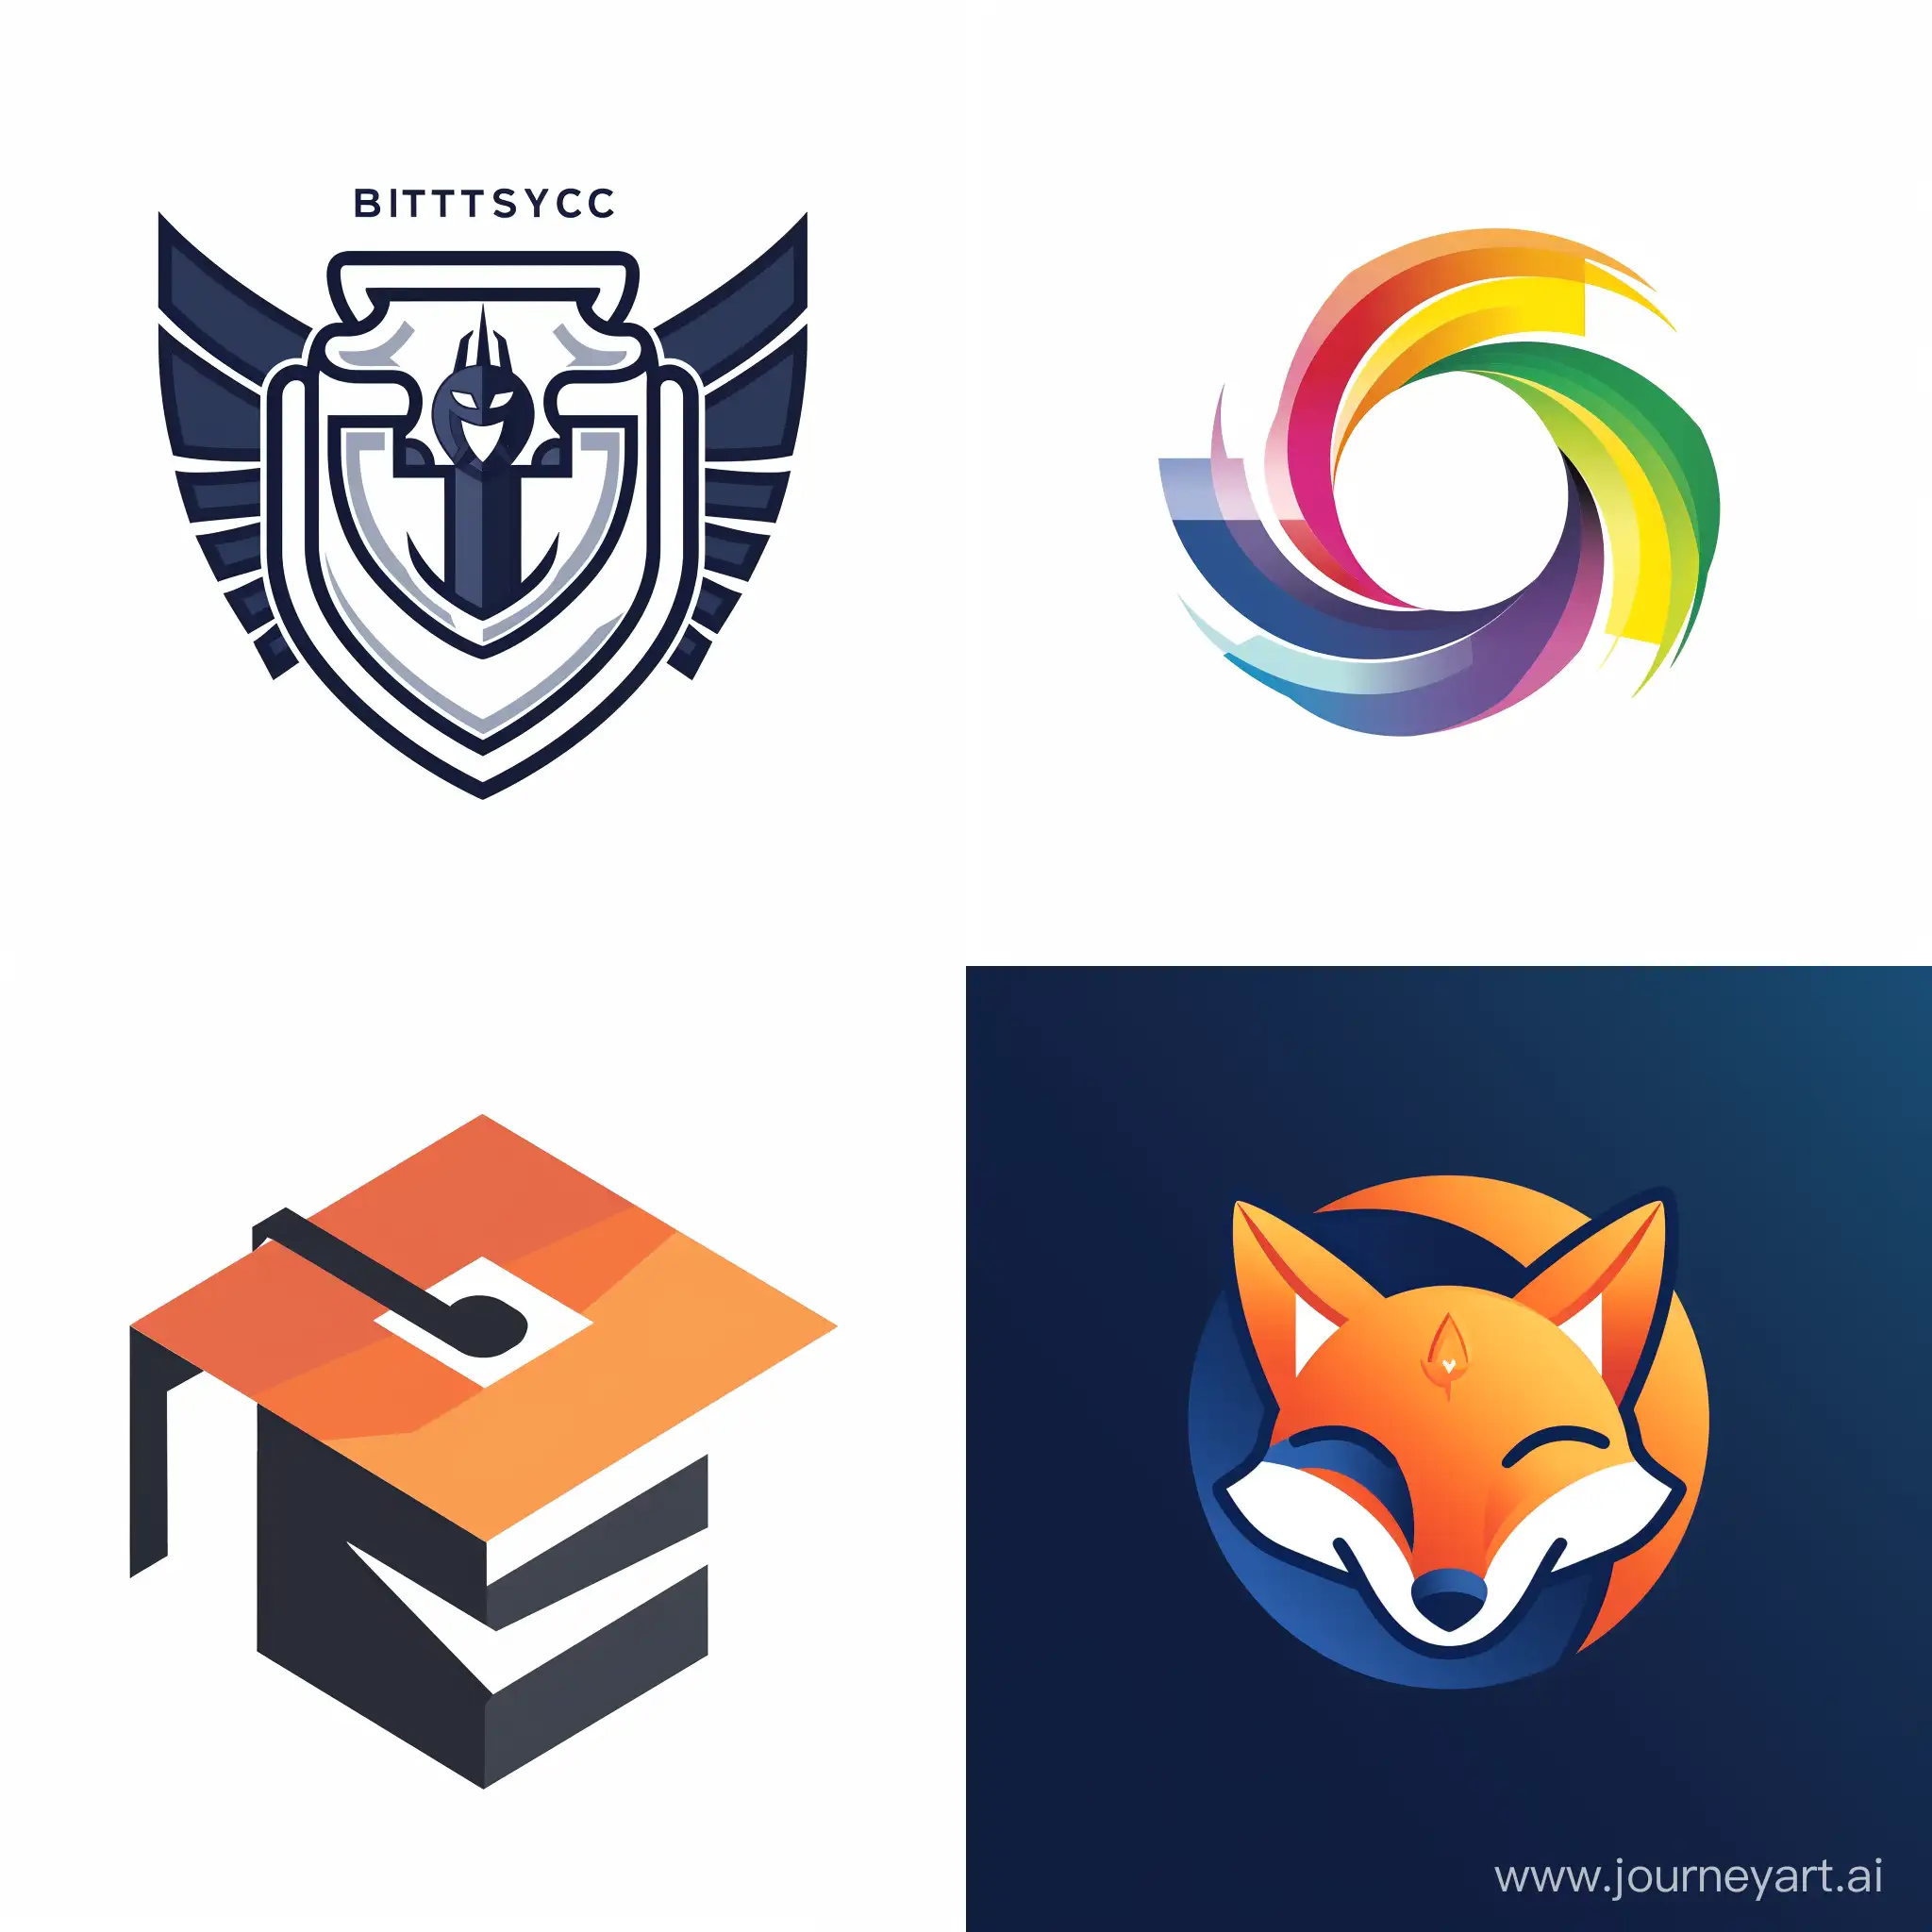 design a logo for a college website called 'bitsync'